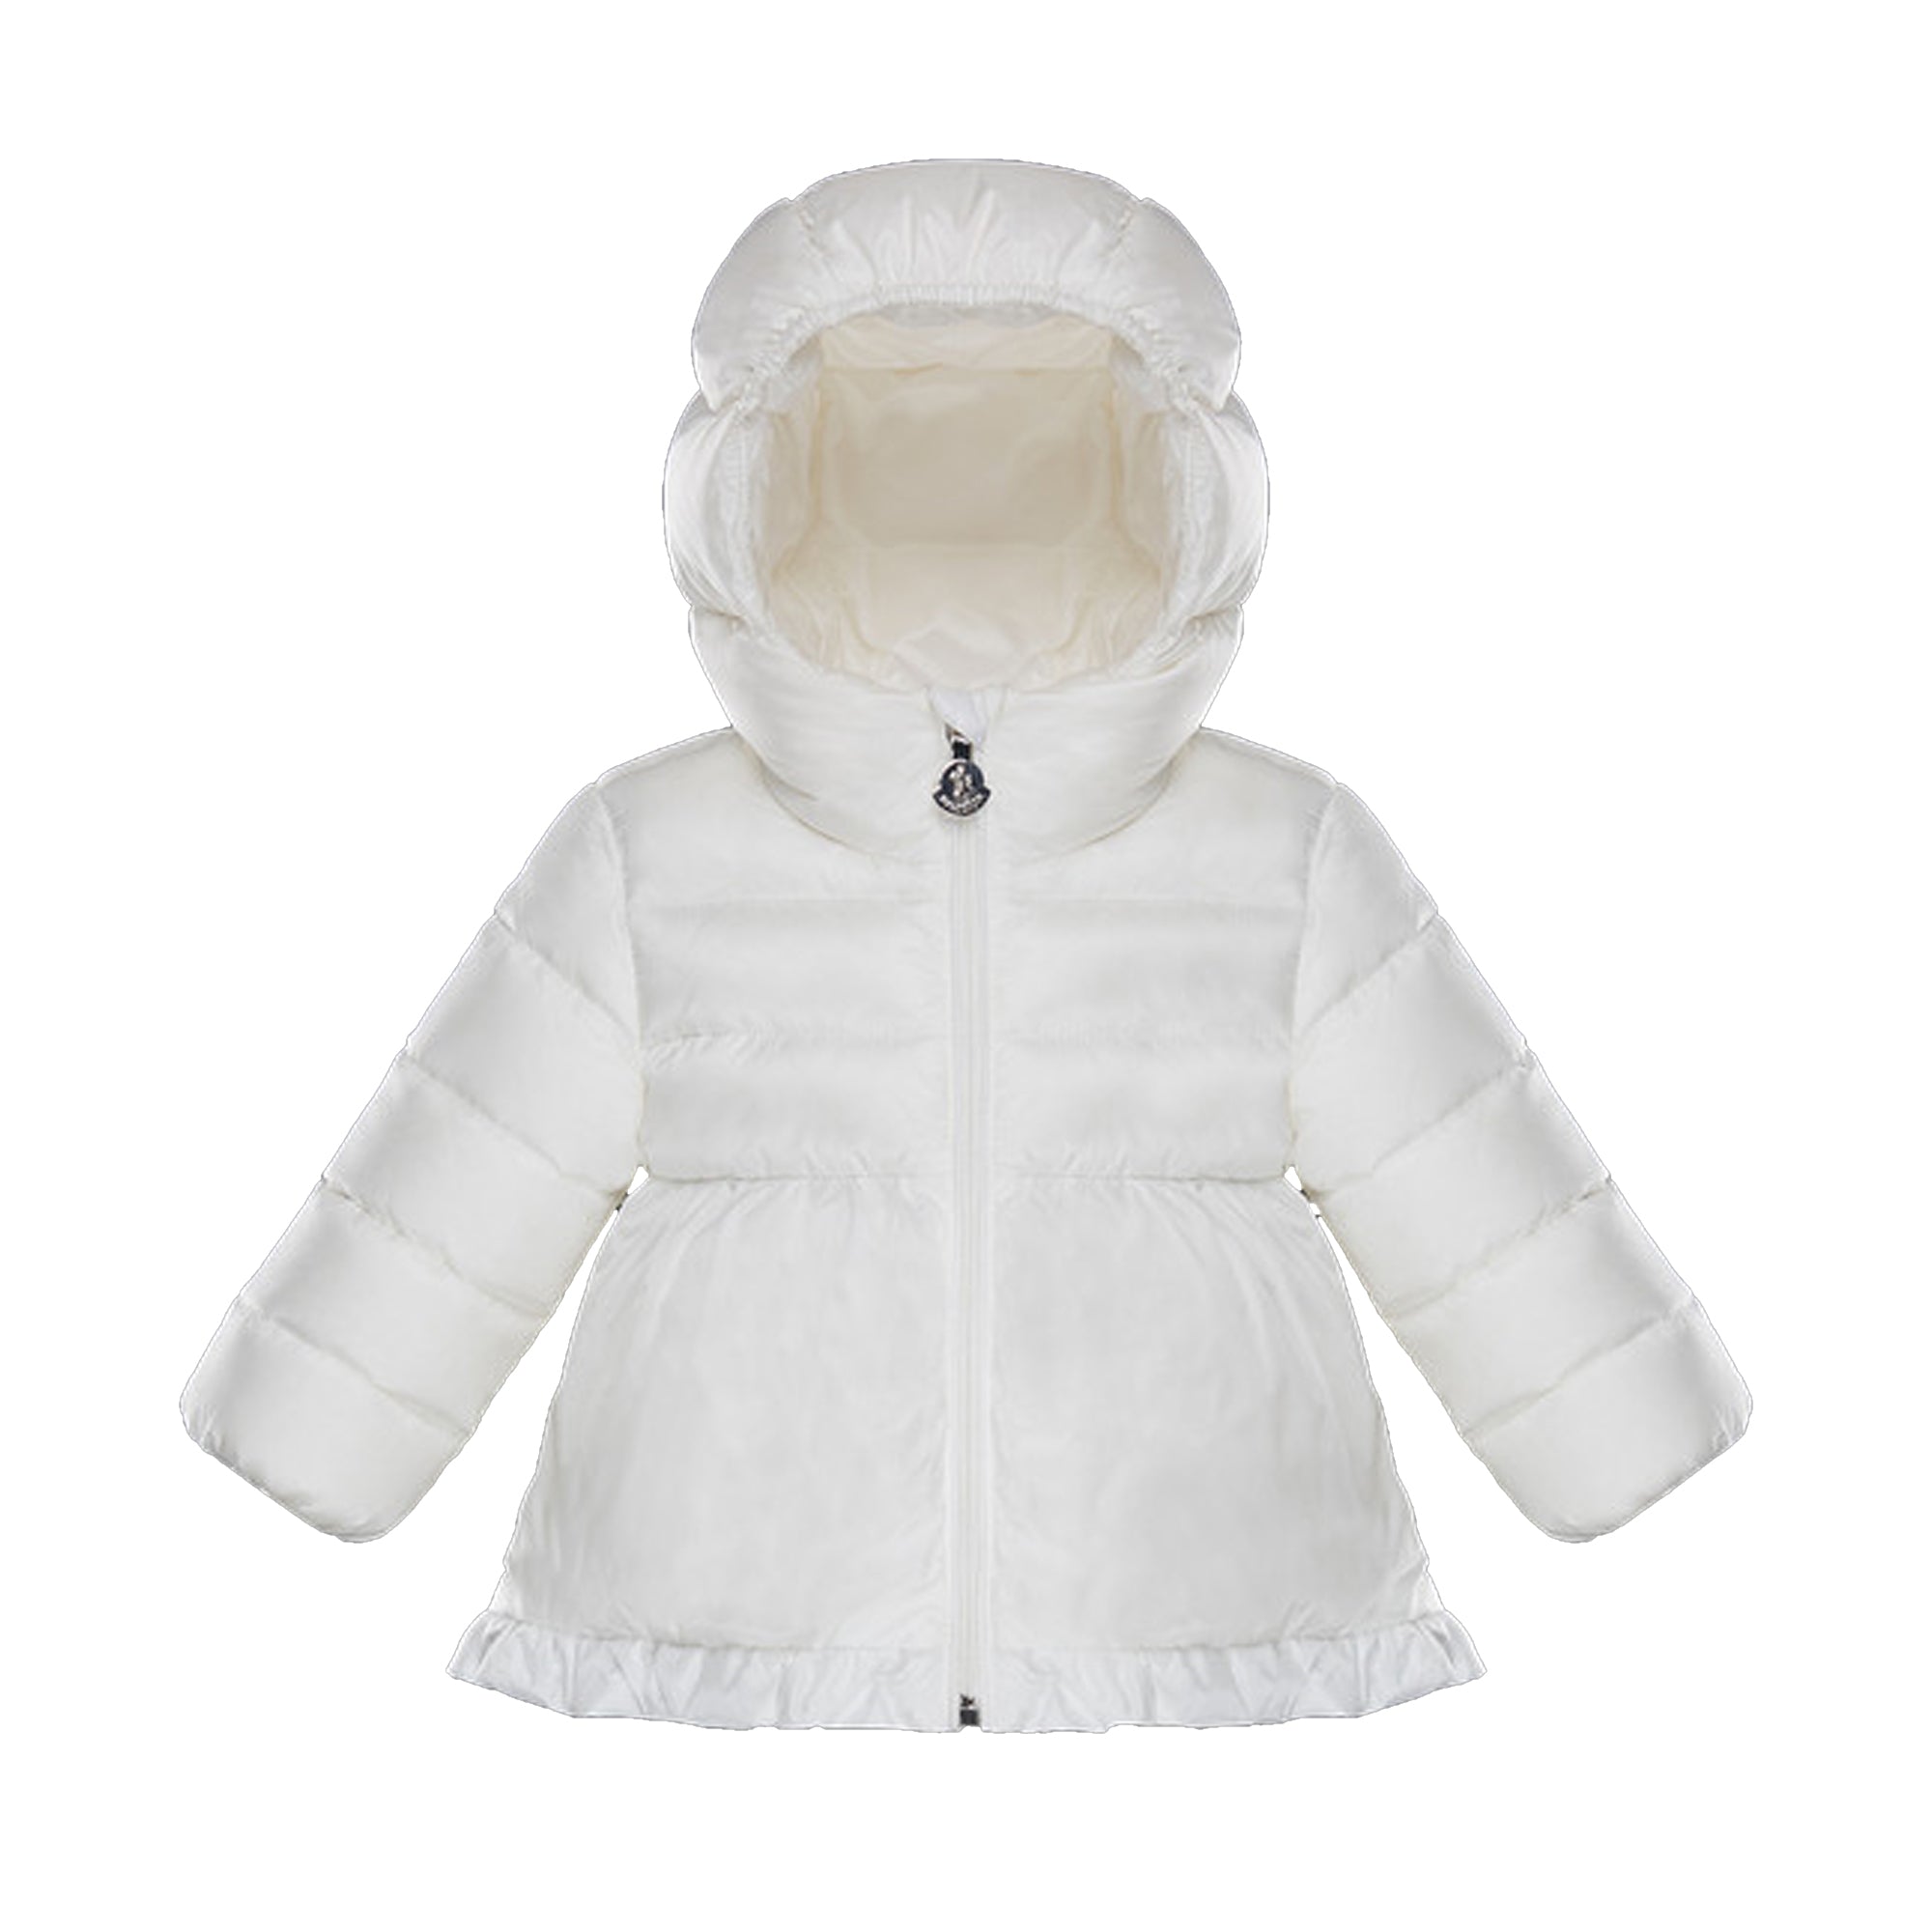 Baby Girls White "ODILE GIUBBOTTO" Coat